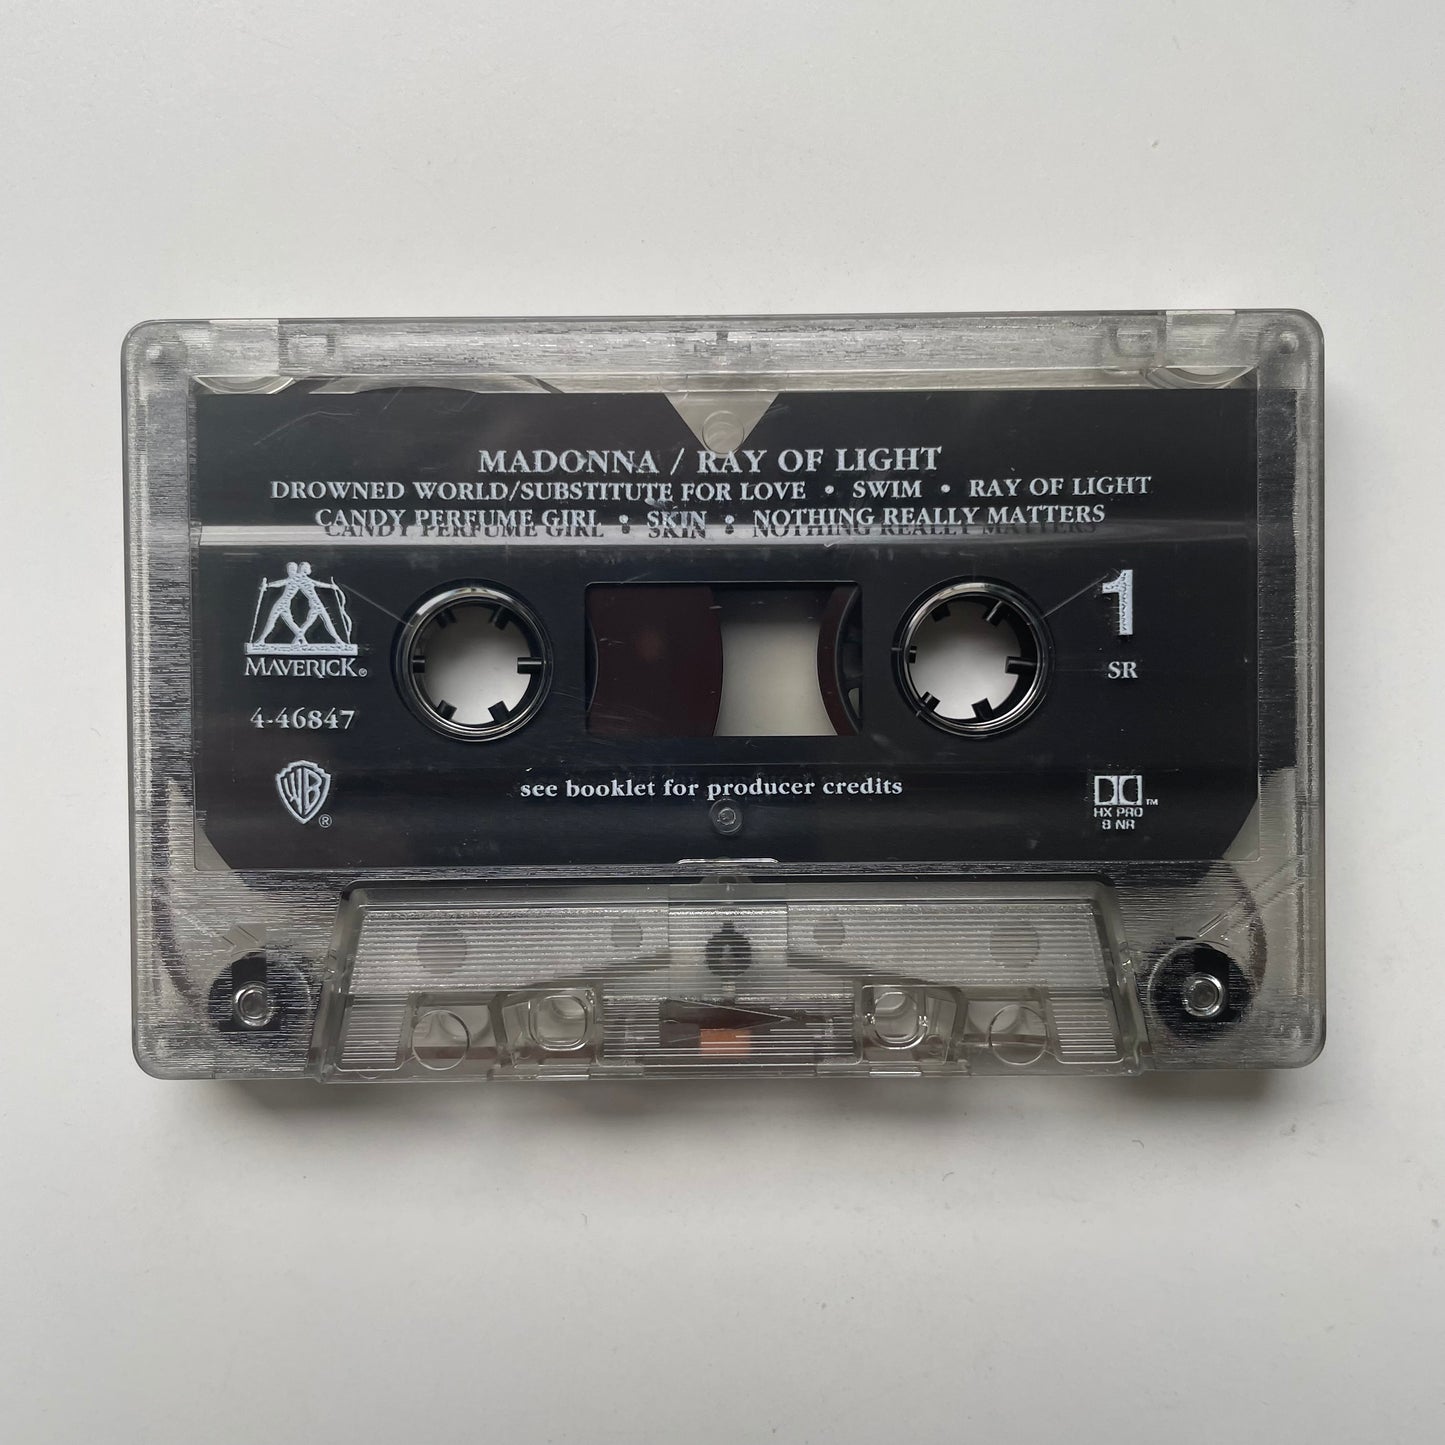 Tape Cassette Madonna Ray of Light 1998 side 1 